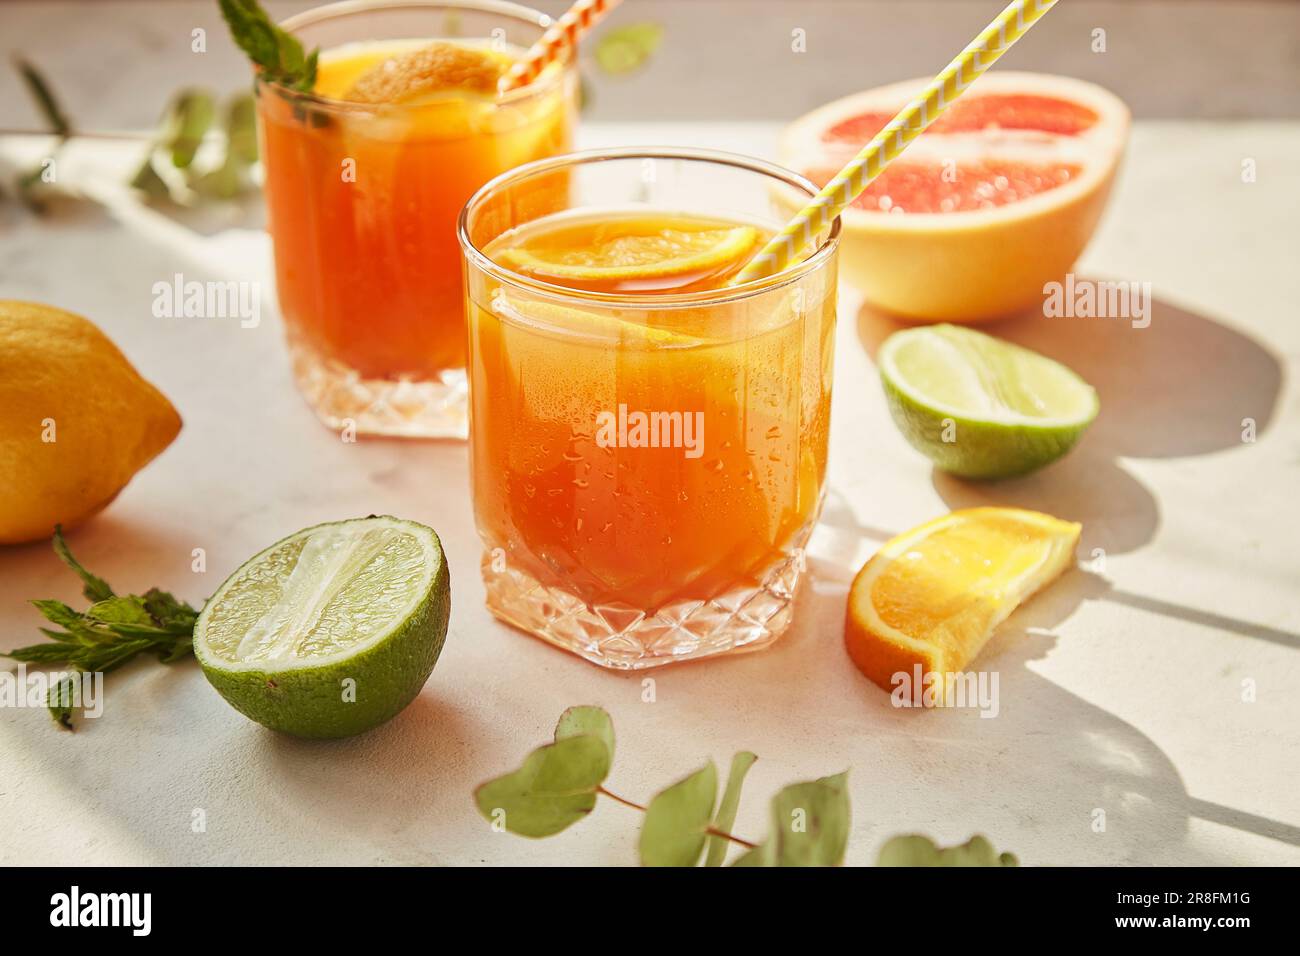 https://c8.alamy.com/comp/2R8FM1G/summer-orange-cocktails-with-fresh-citrus-fruits-hard-seltzer-lemonade-refreshing-drinks-low-alcohol-mocktails-summer-party-concept-shadow-and-s-2R8FM1G.jpg